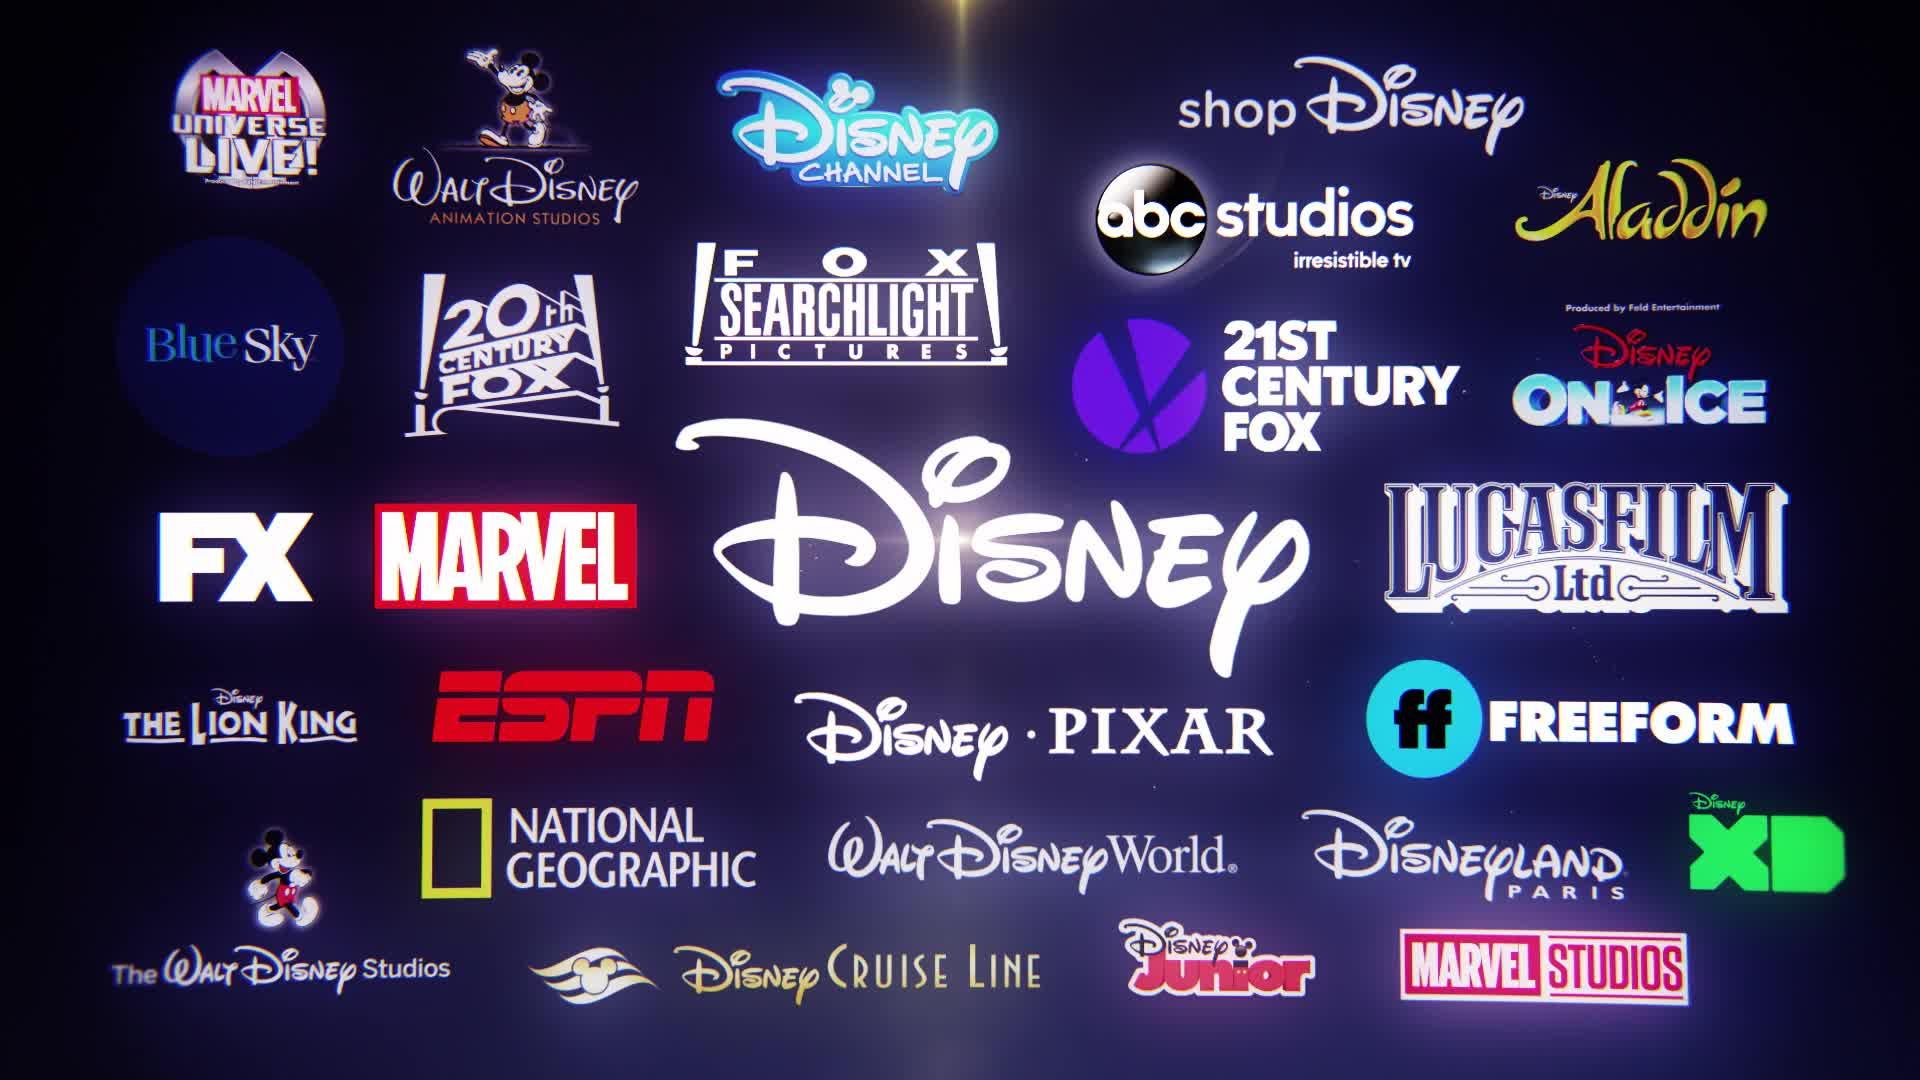 Walt Disney Company 